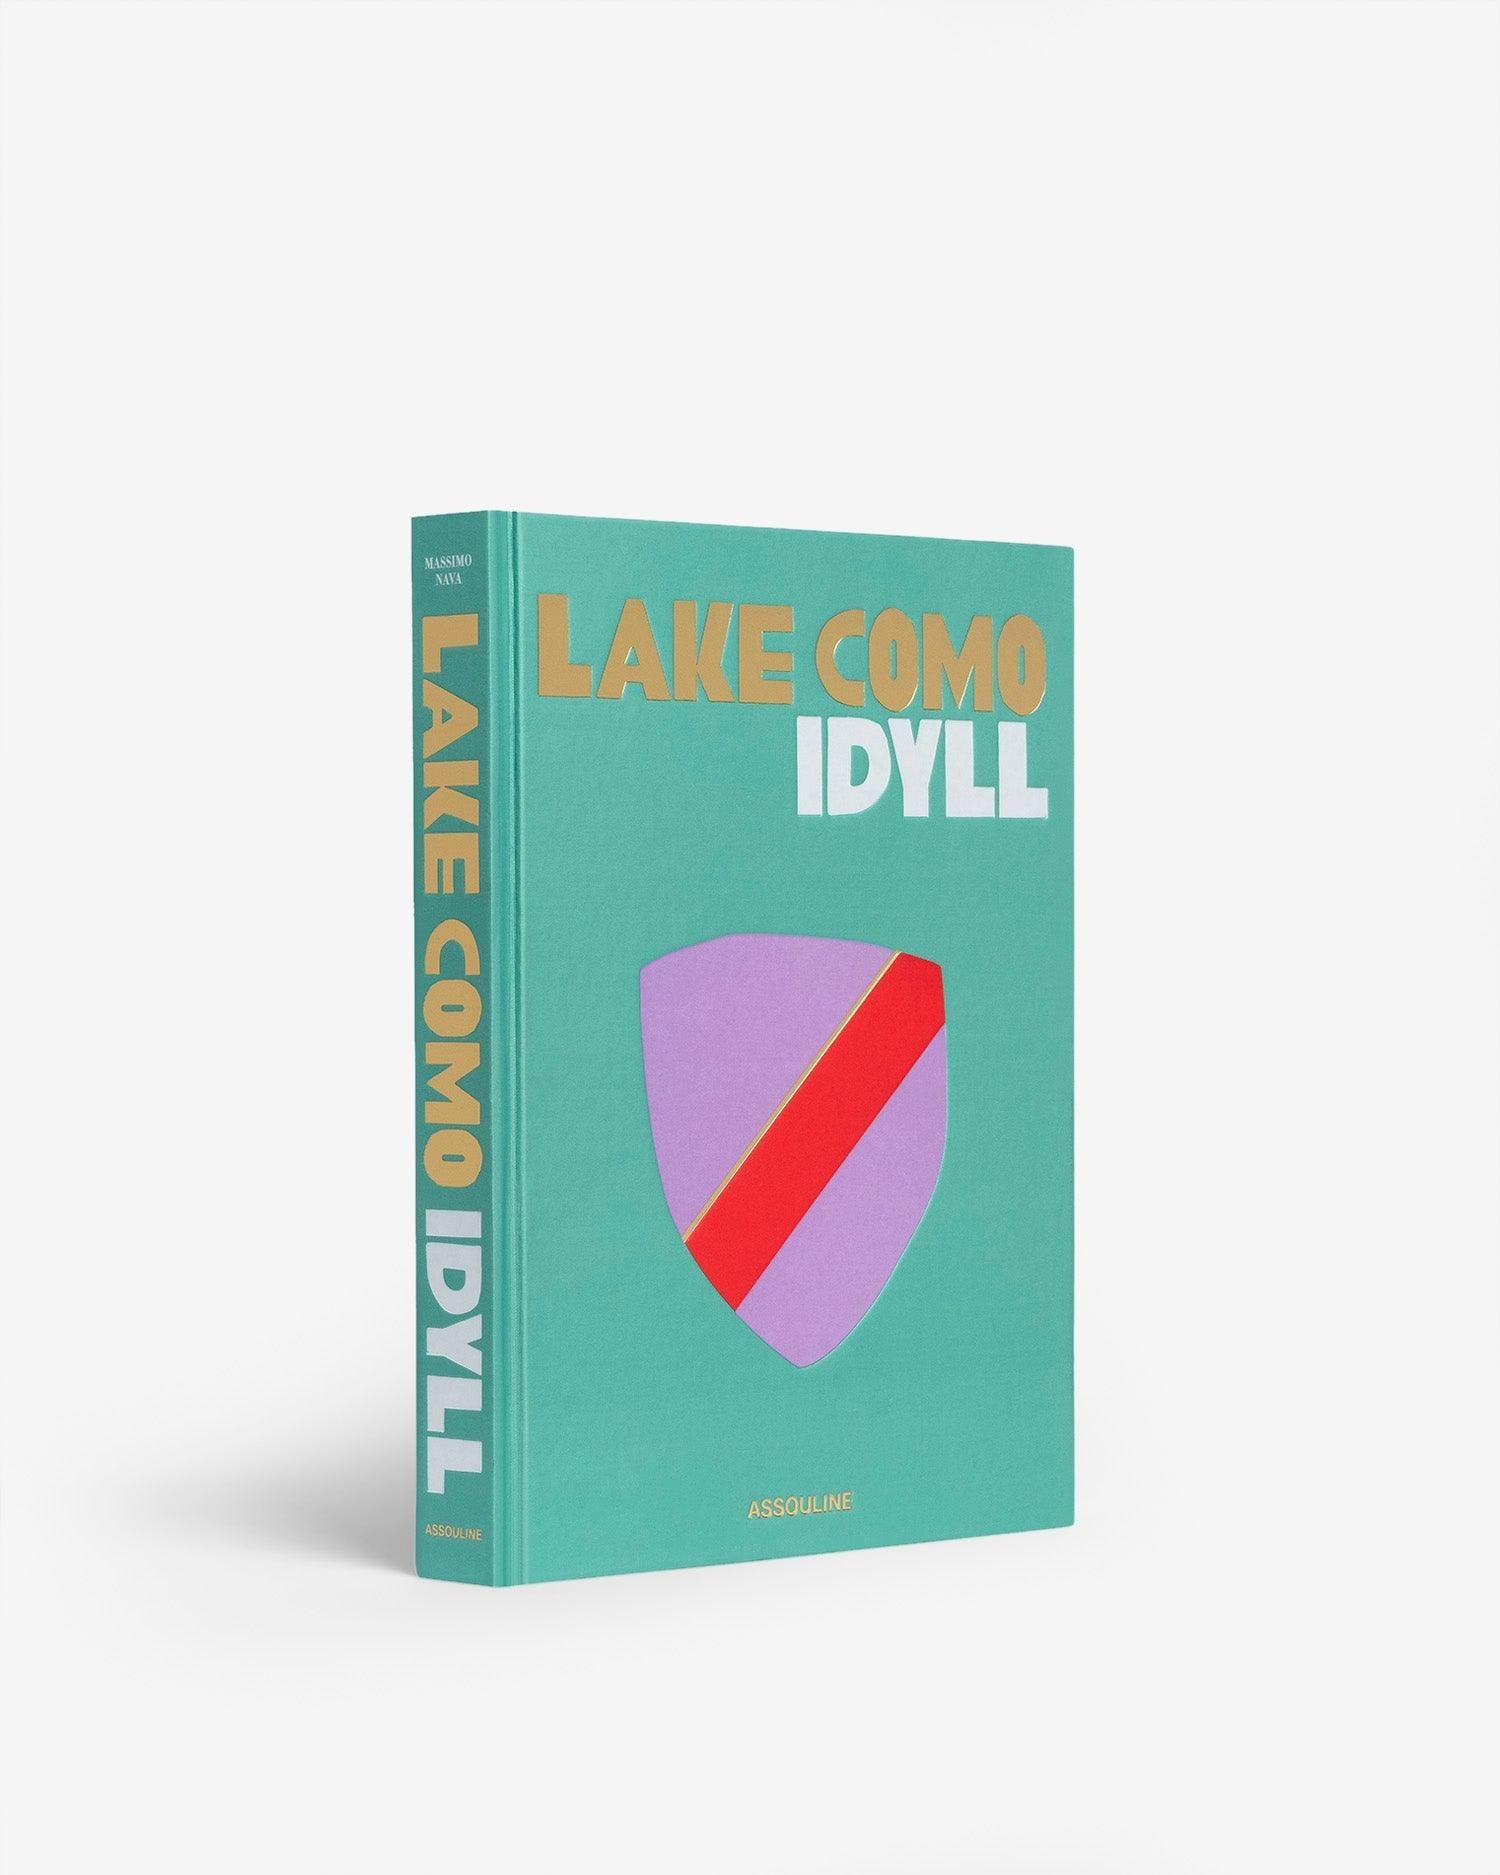 Lake Como Idyll by Massimo Nava - Coffee Table Book | ASSOULINE | Assouline